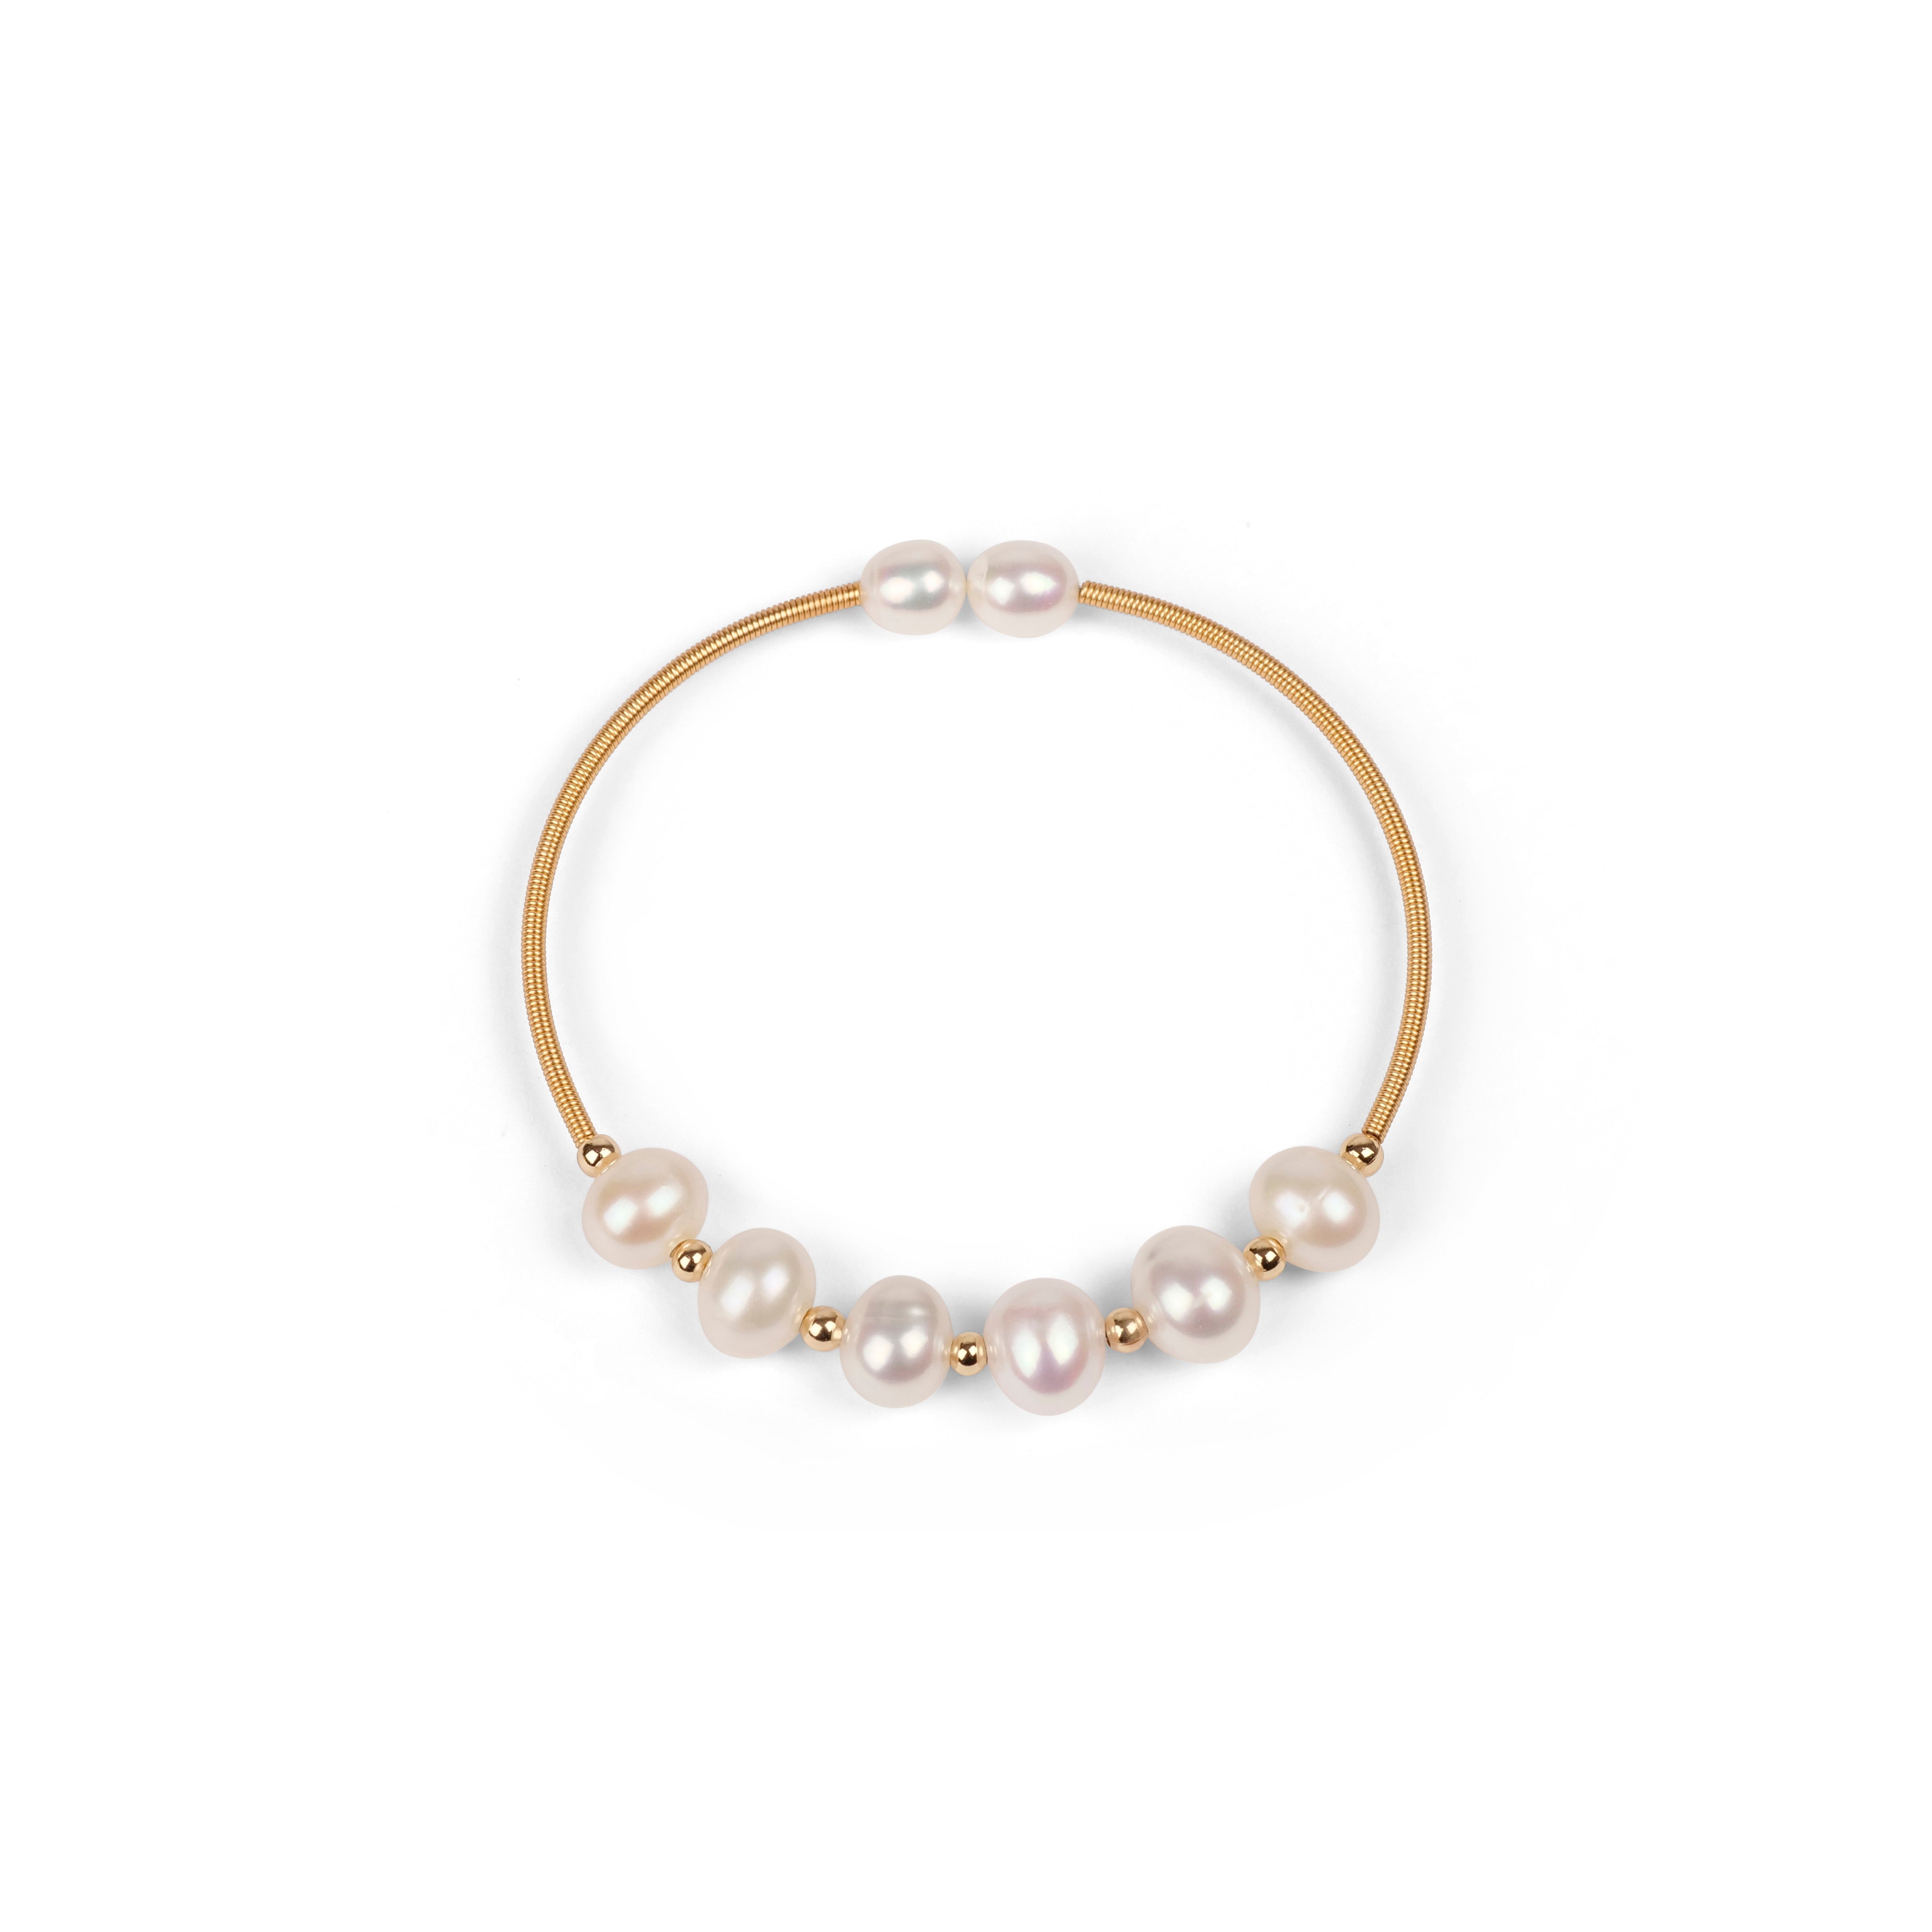 Slip on Bangle Bracelet with White Pearl